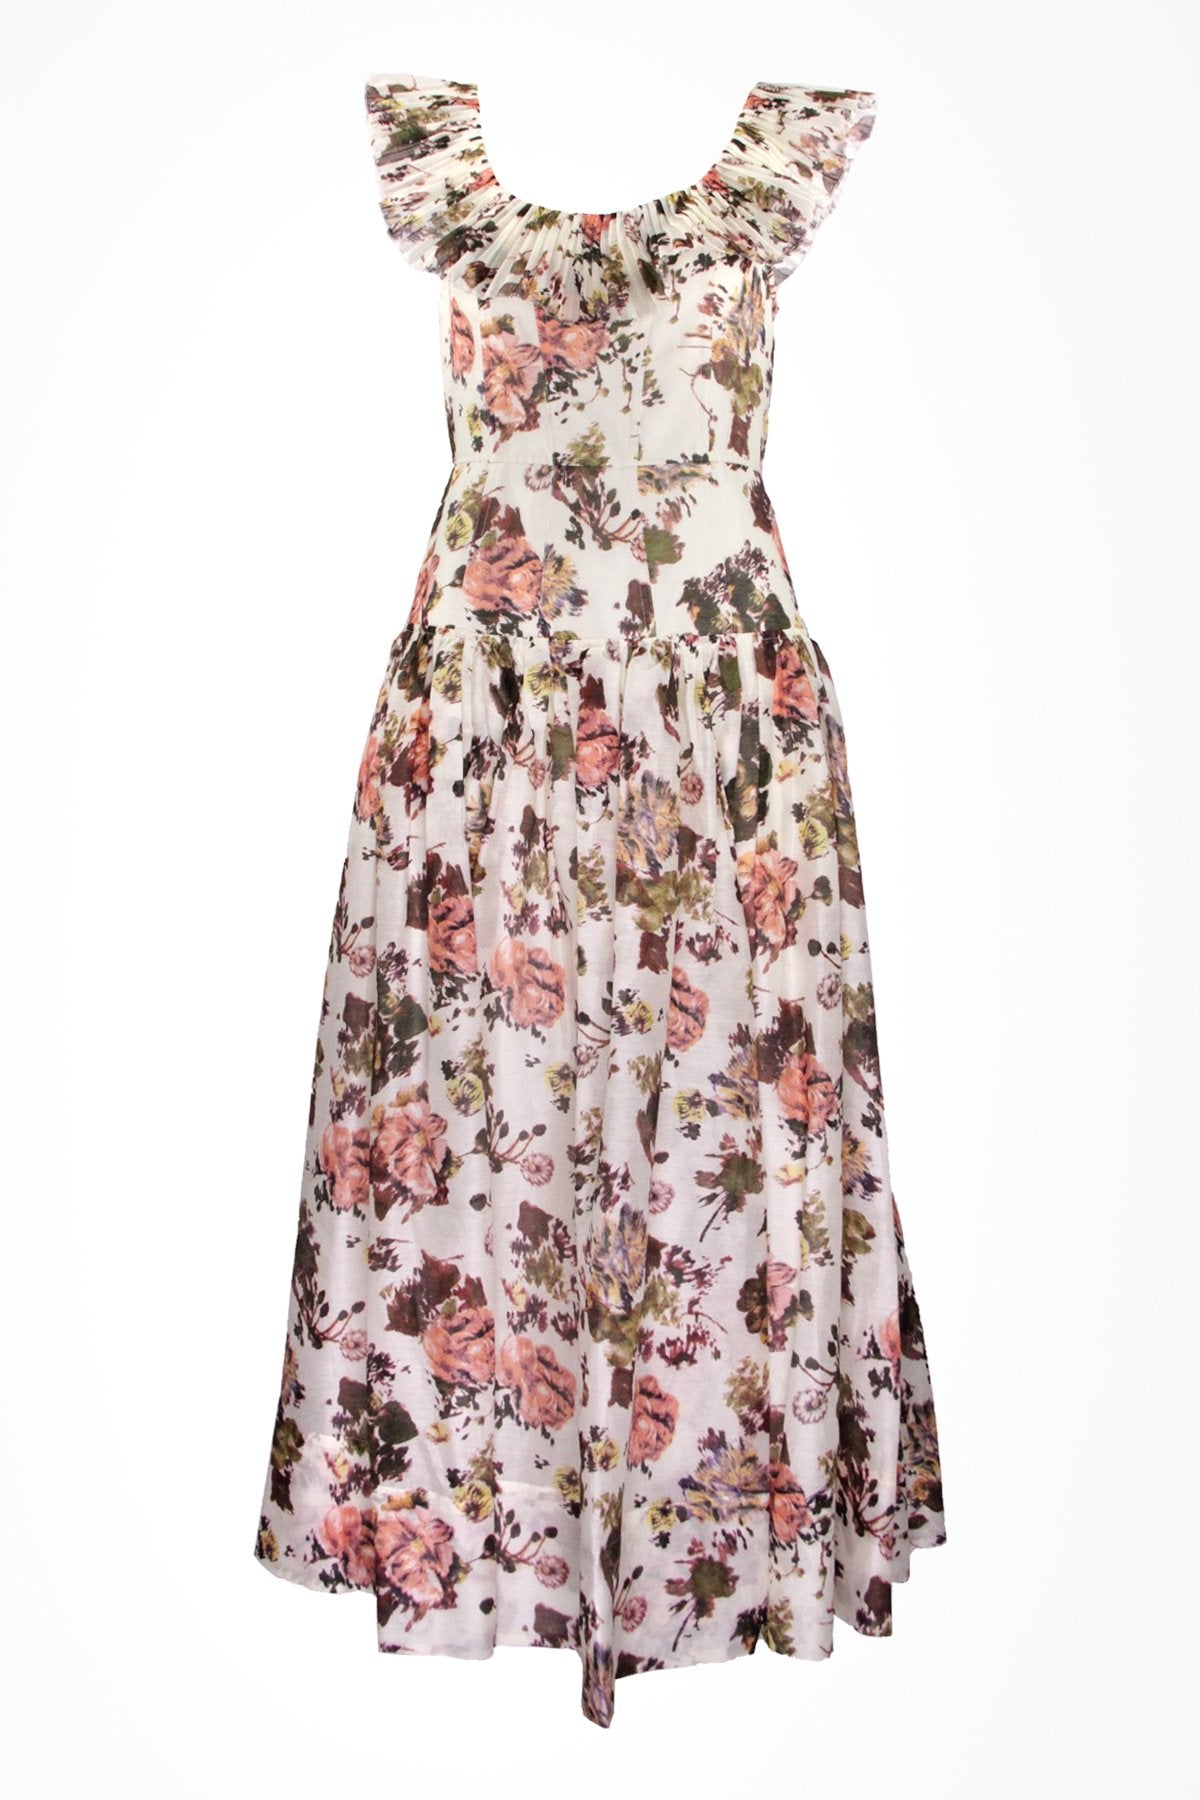 Coretta Dress in Daisy - shop-olivia.com